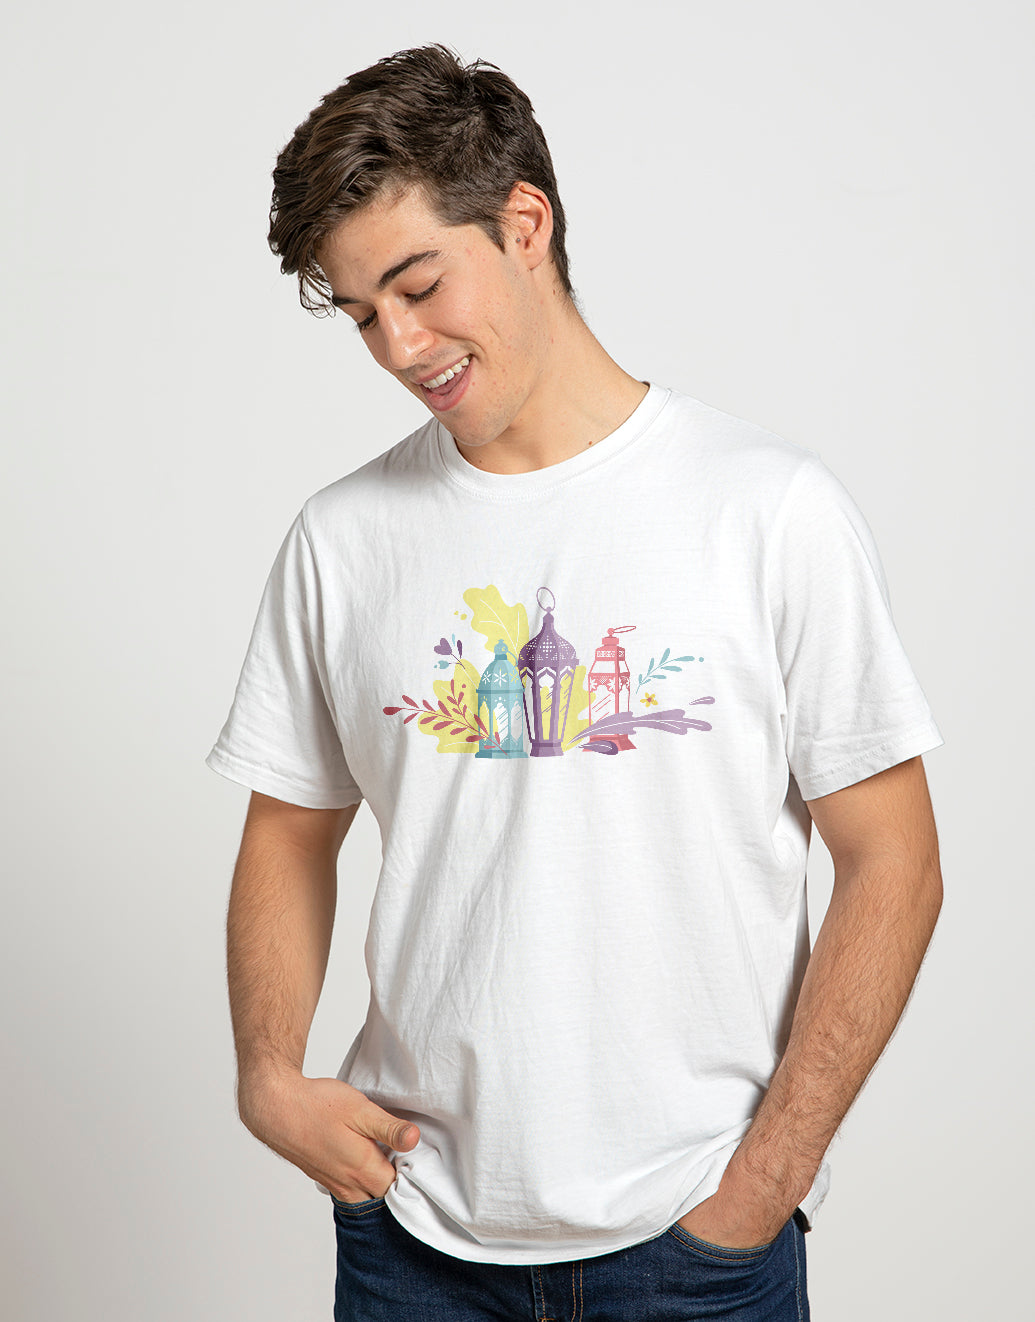 Men's T-shirt (Colorful Lanterns)